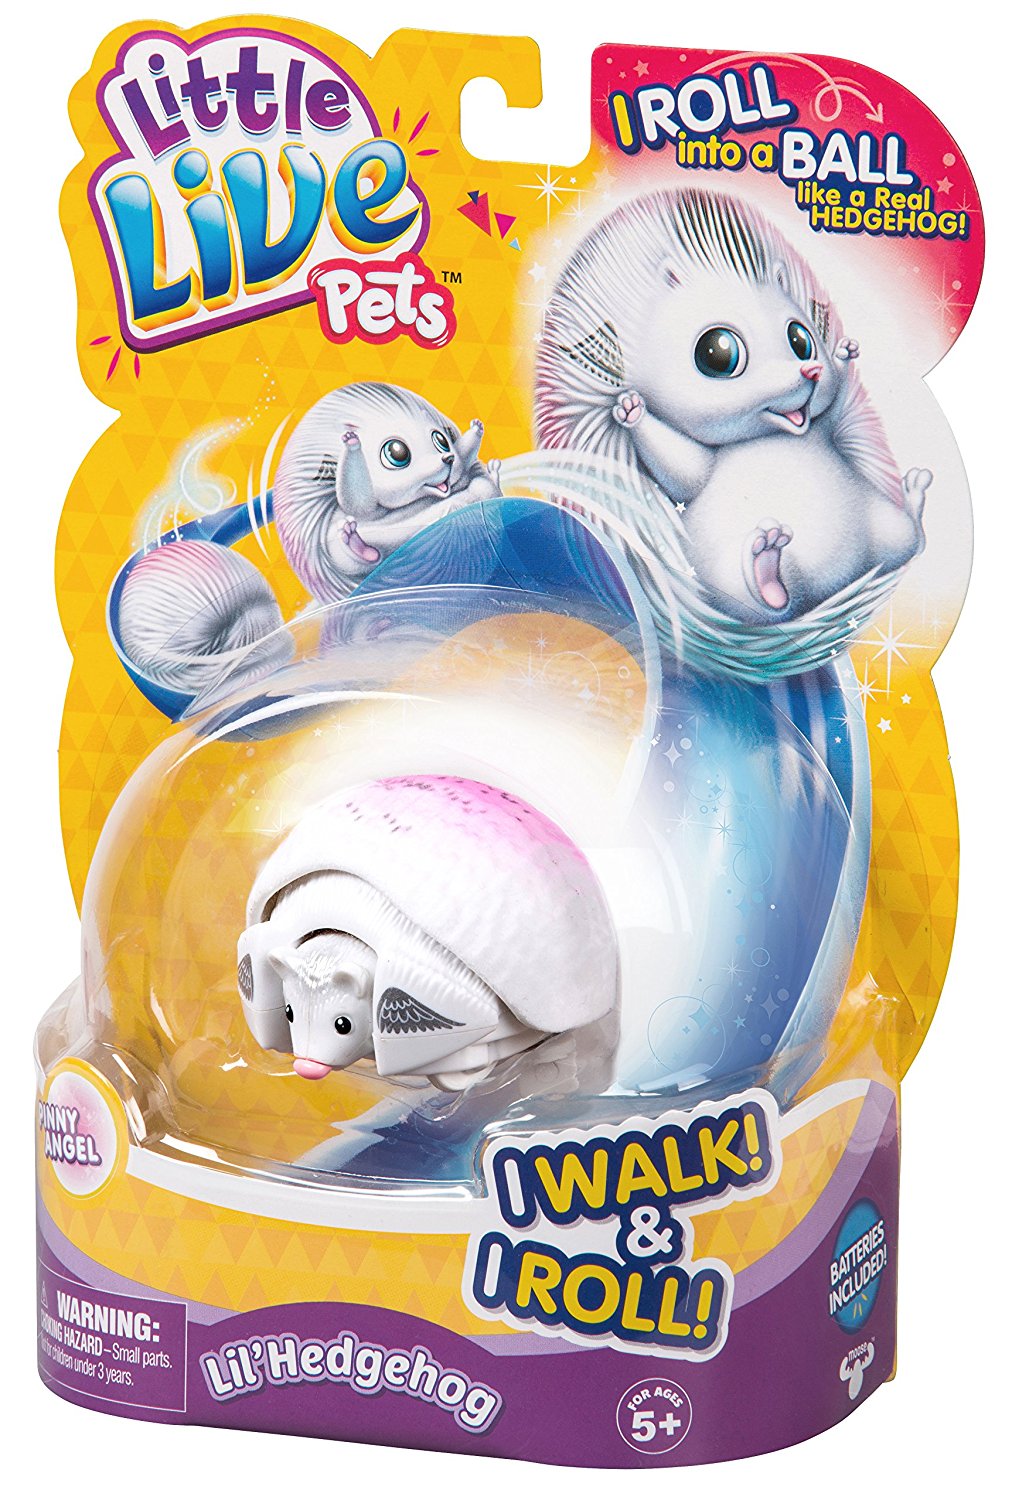 Интерактивная игрушка Little Live Pets – Ежик Pinny Angel  